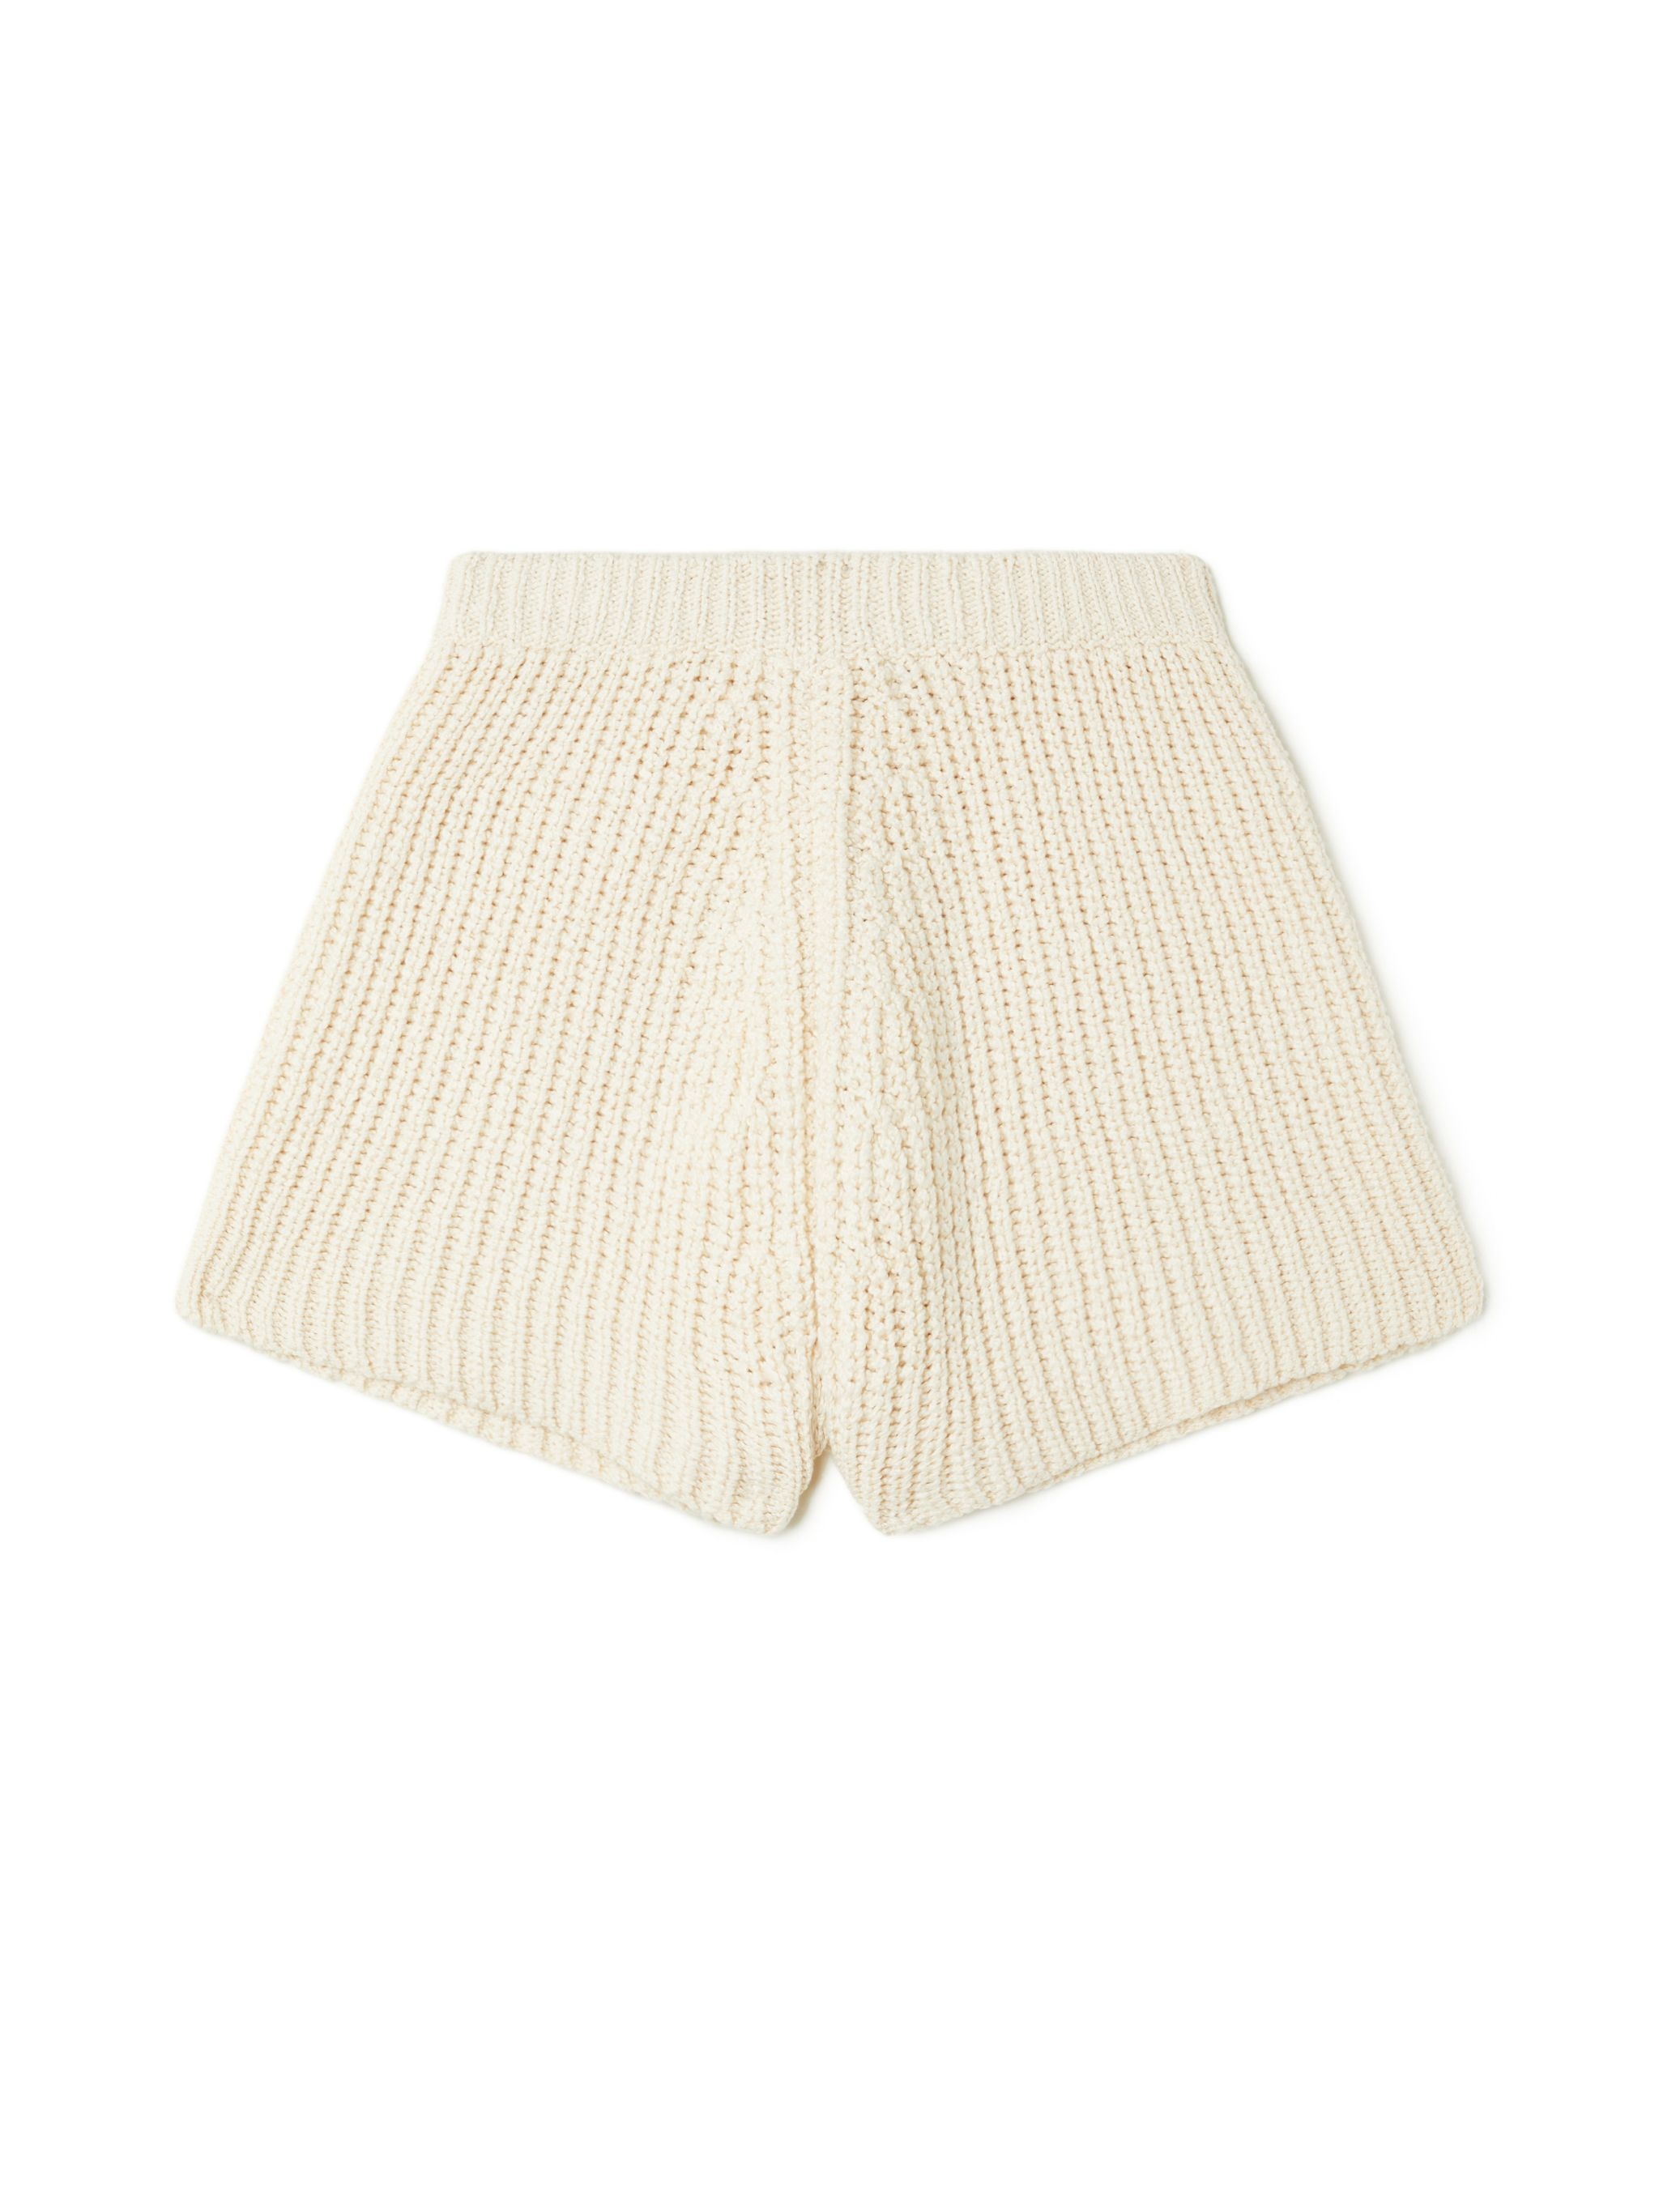 Lush Nature Knit Shorts - 1